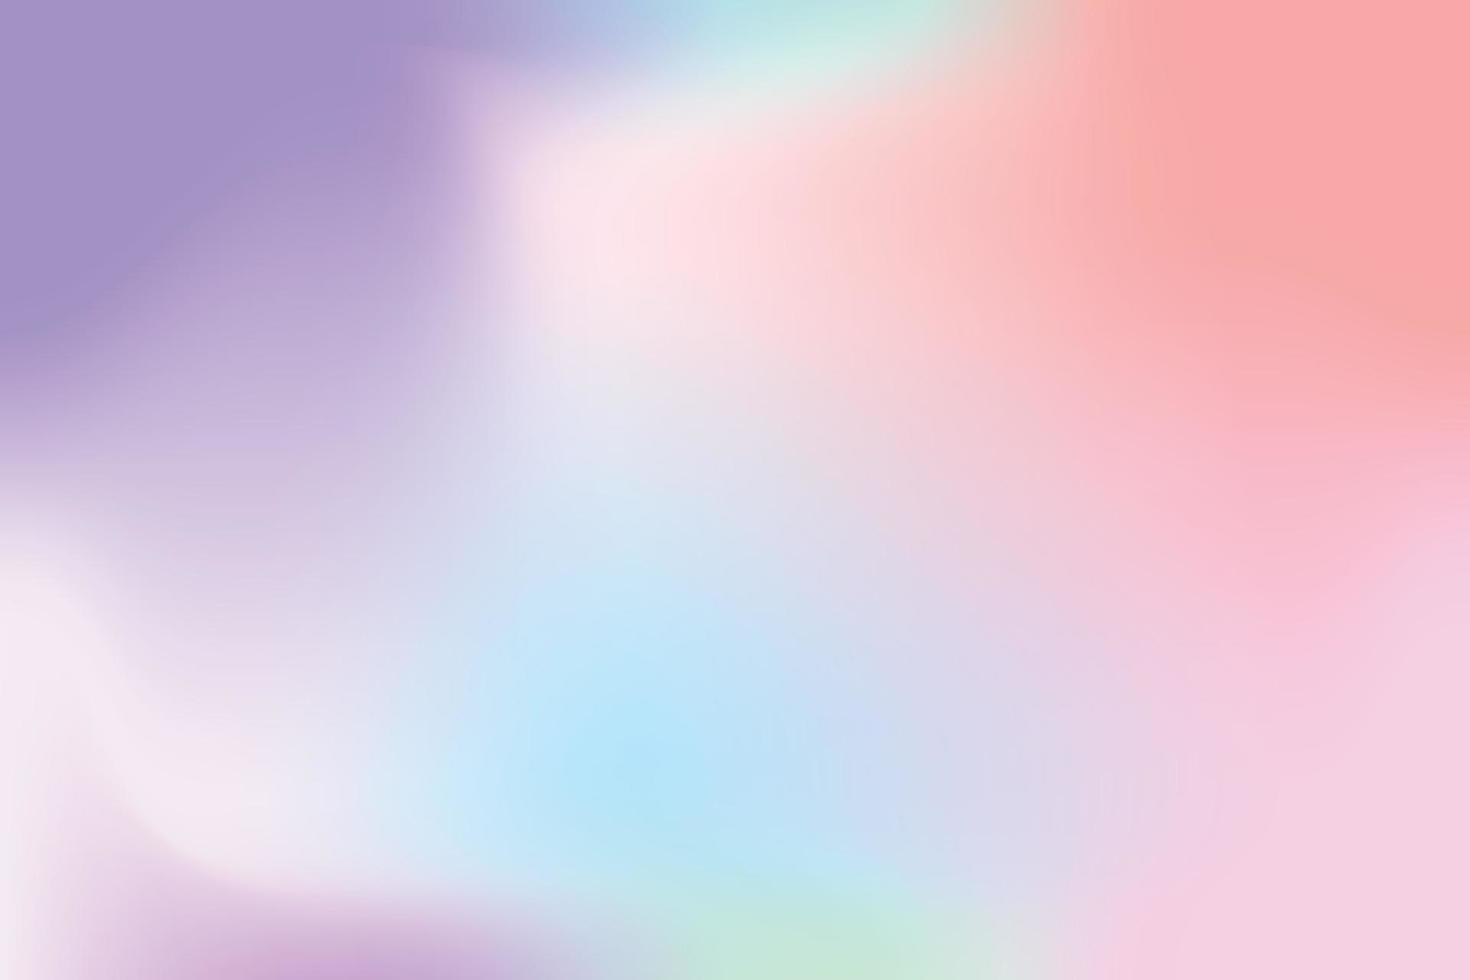 grainy gradients in pastel colors vector